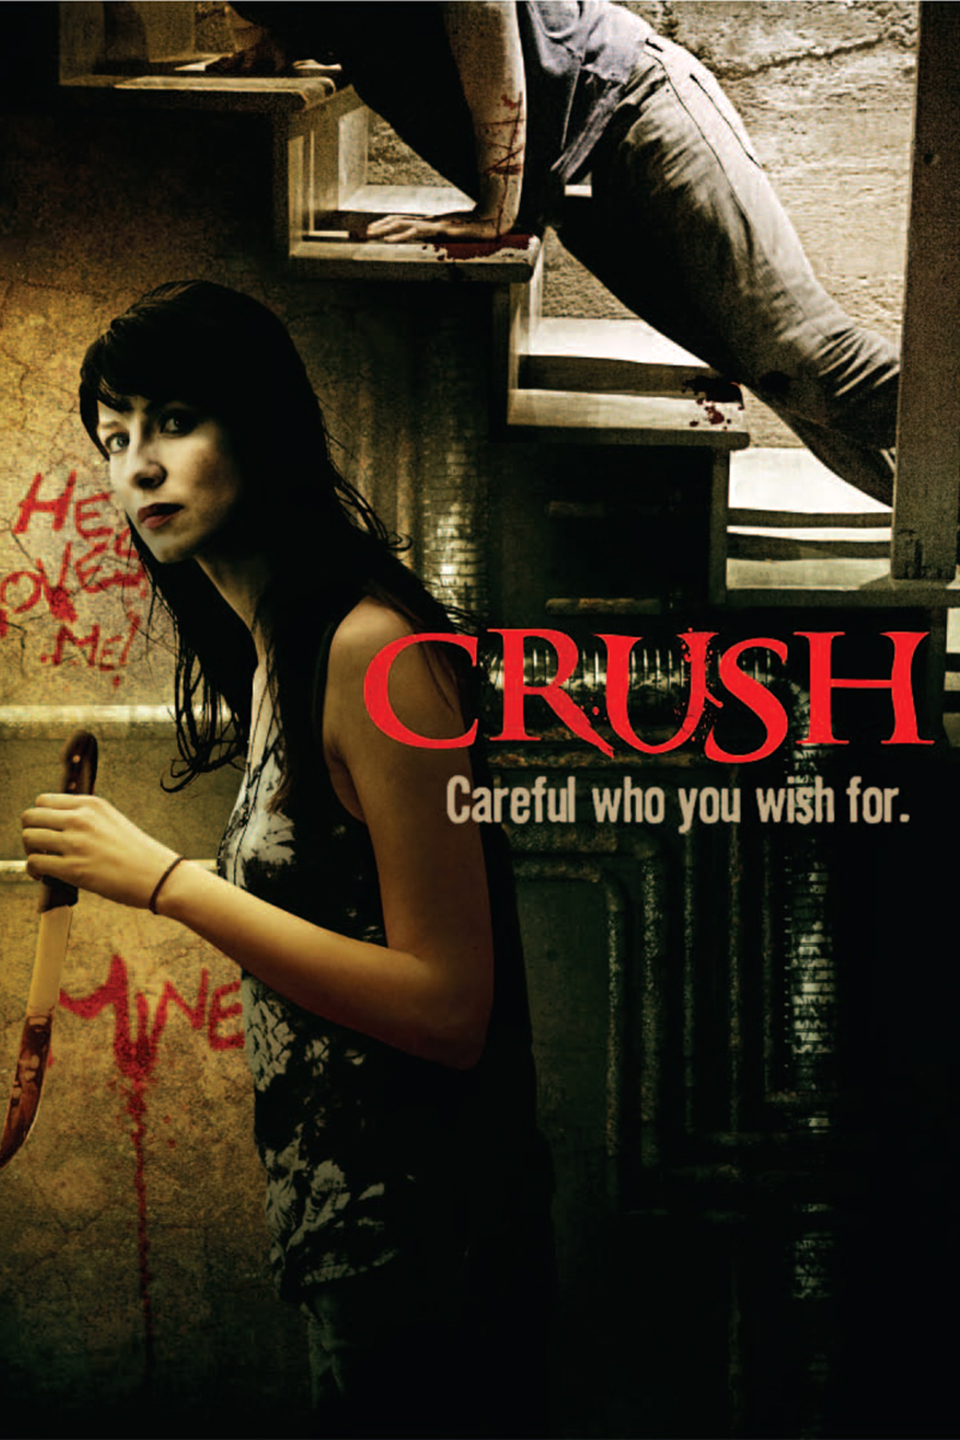 the crush cast